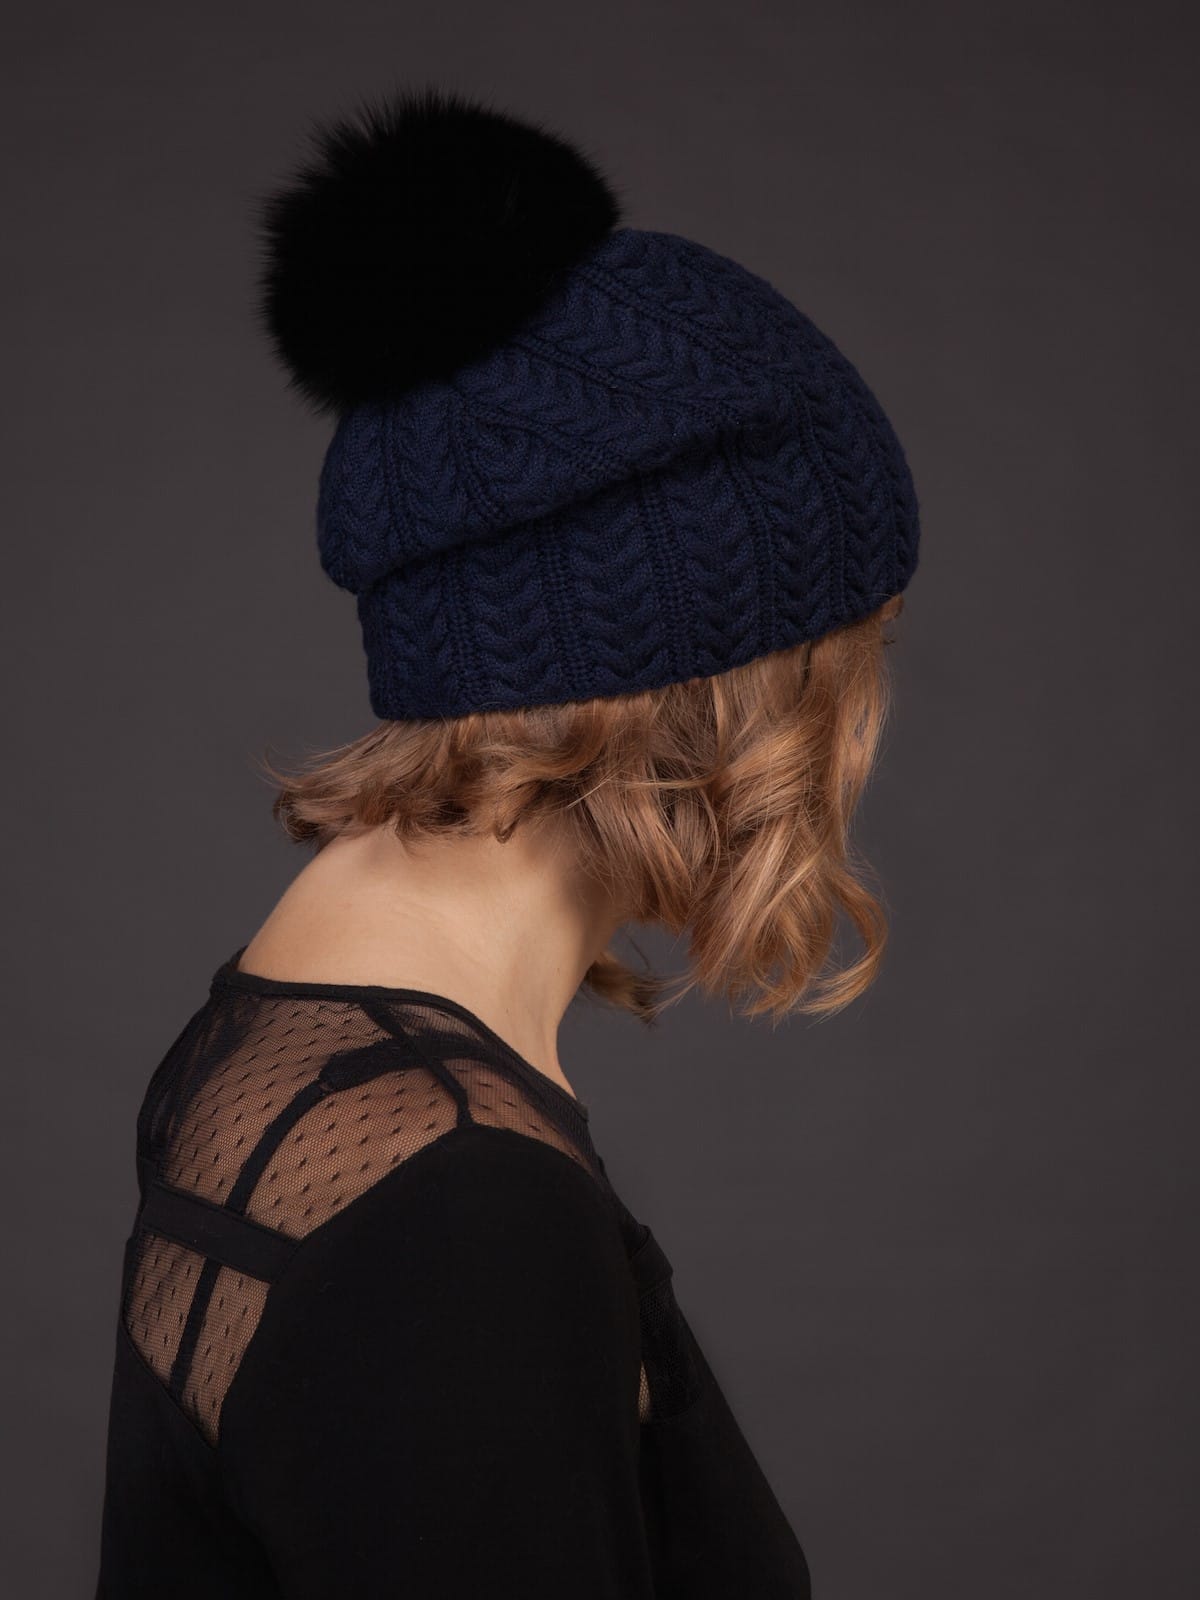 Jamiks Abigail Dark Blue Girls Warm Winter Natural Fur Pom Pom Beanie Hat 